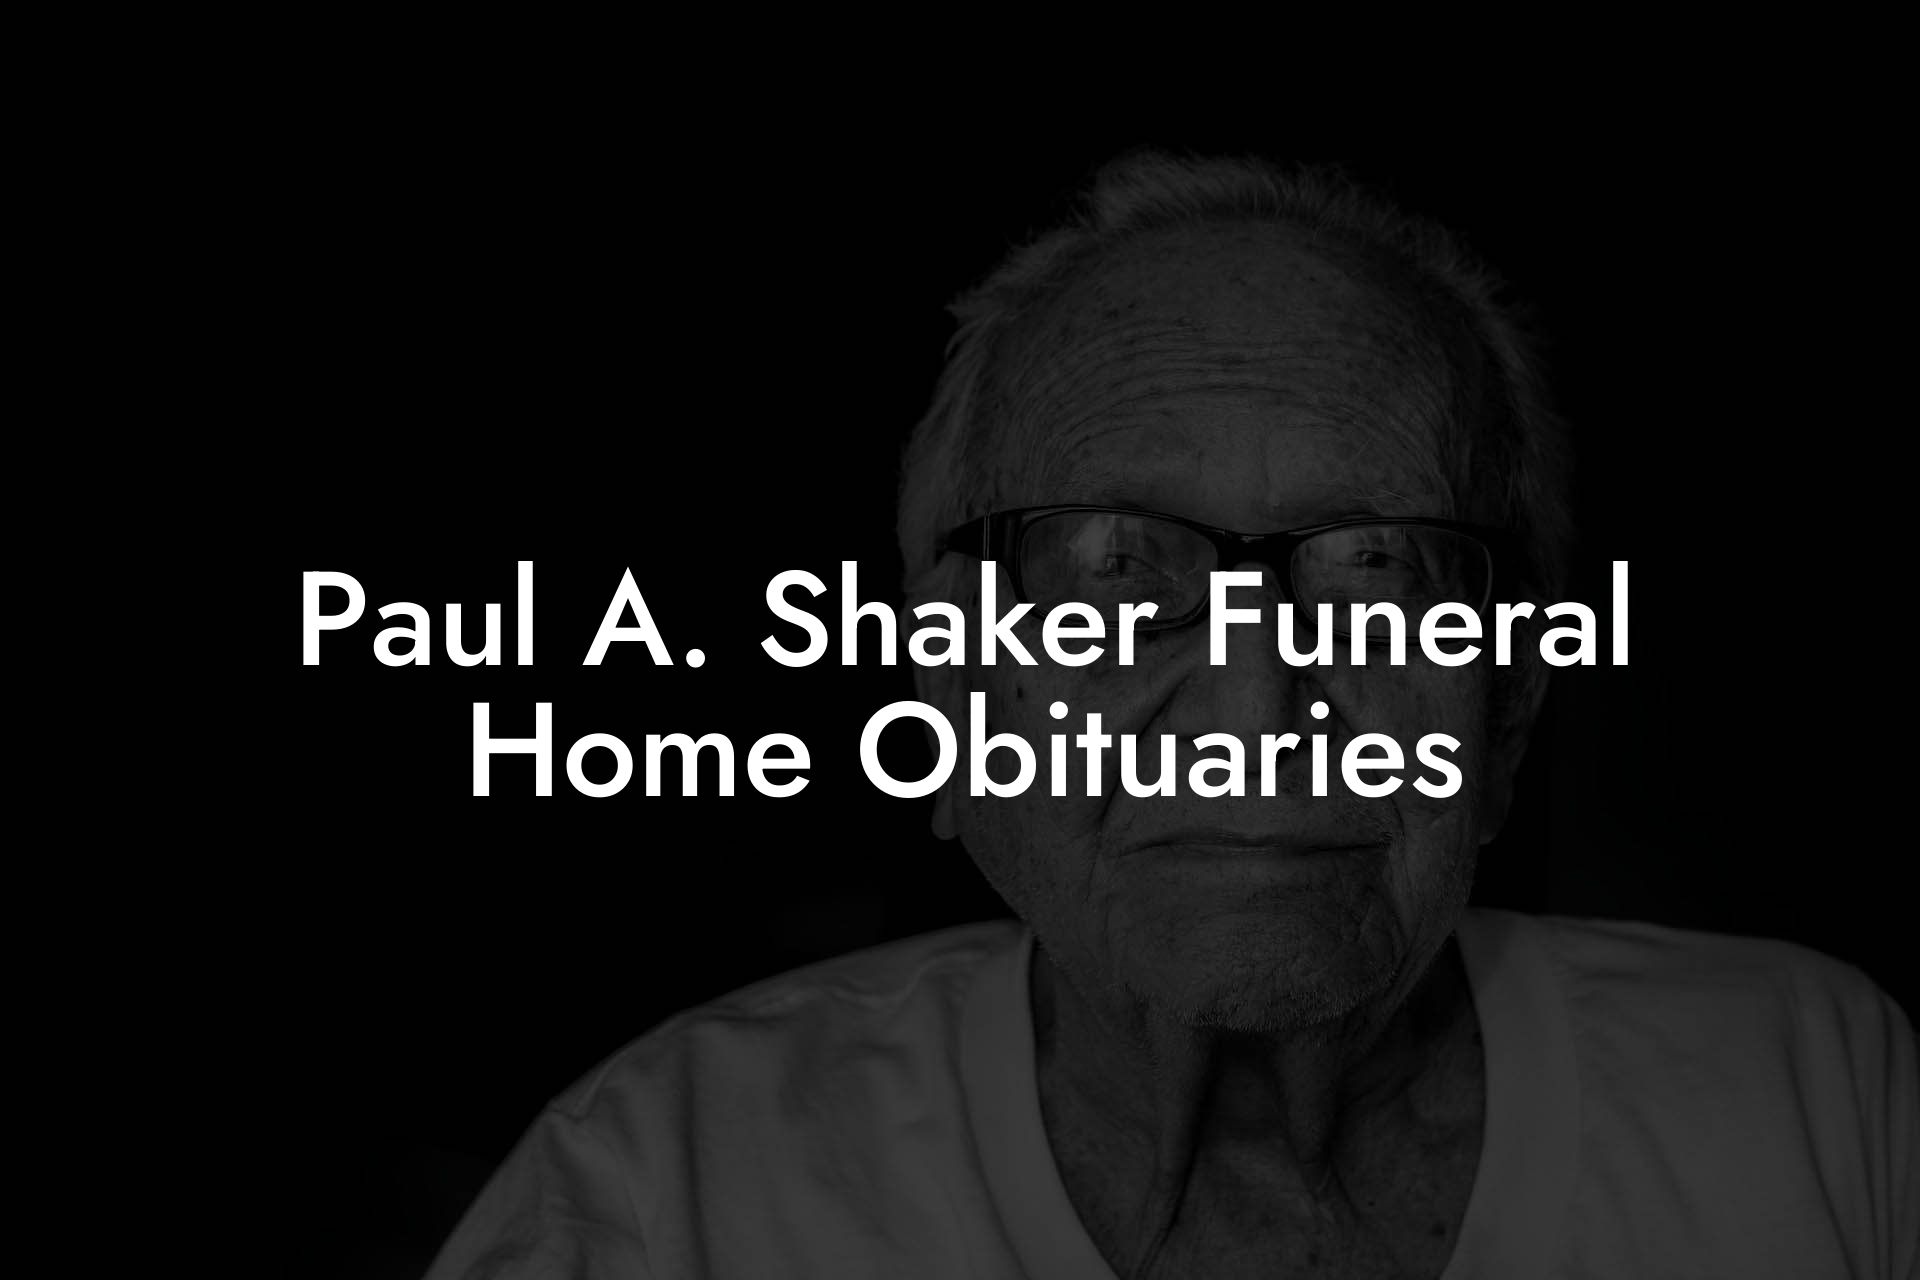 Paul A. Shaker Funeral Home Obituaries